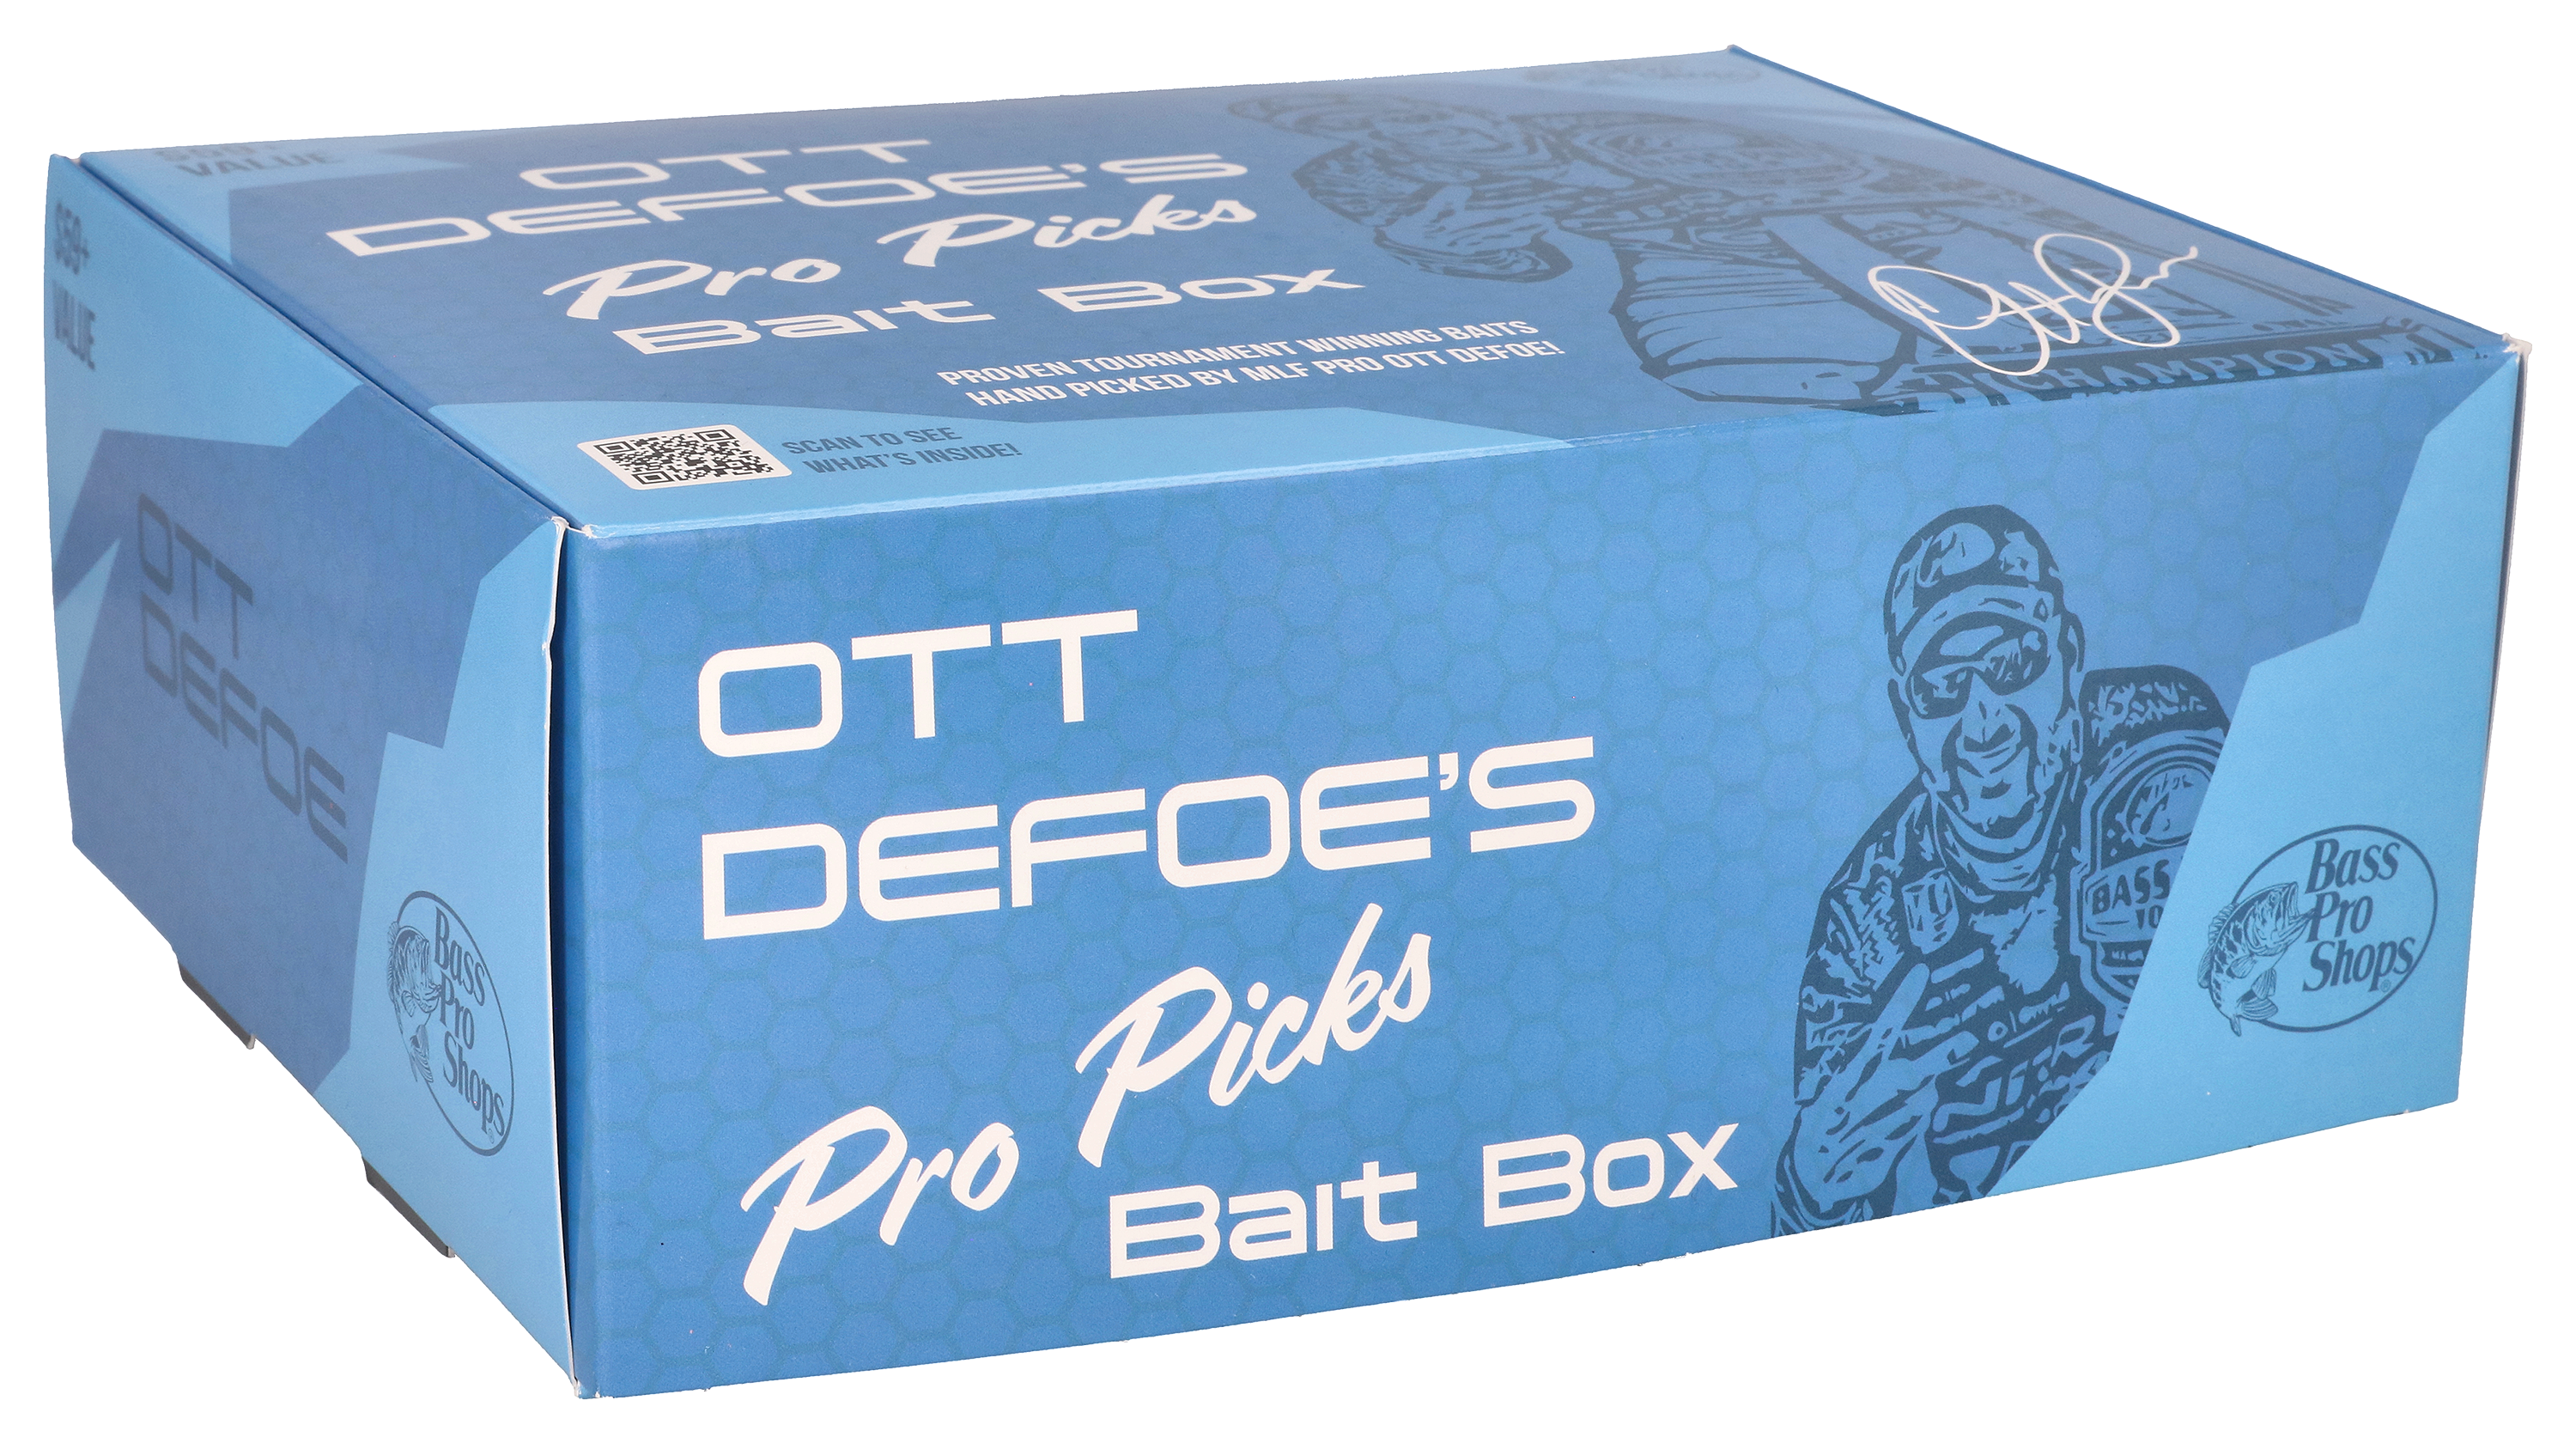 Bass Pro Shops Ott Defoe's Pro Picks Bait Box